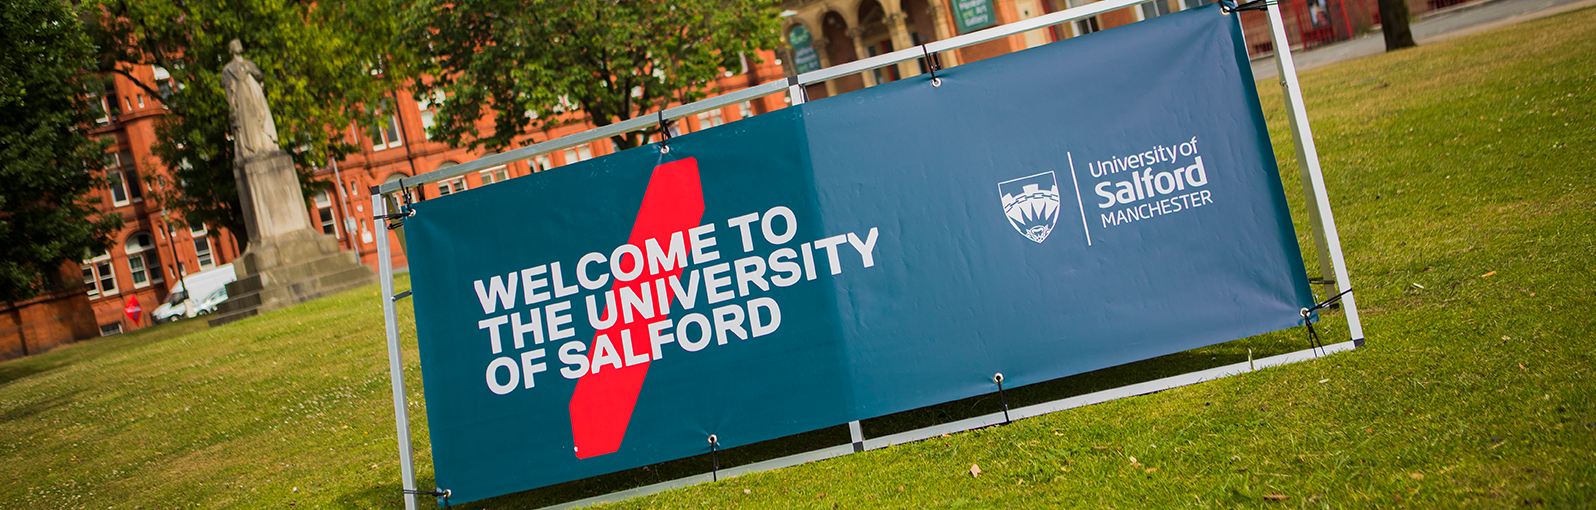 University of Salford postgraduate open day